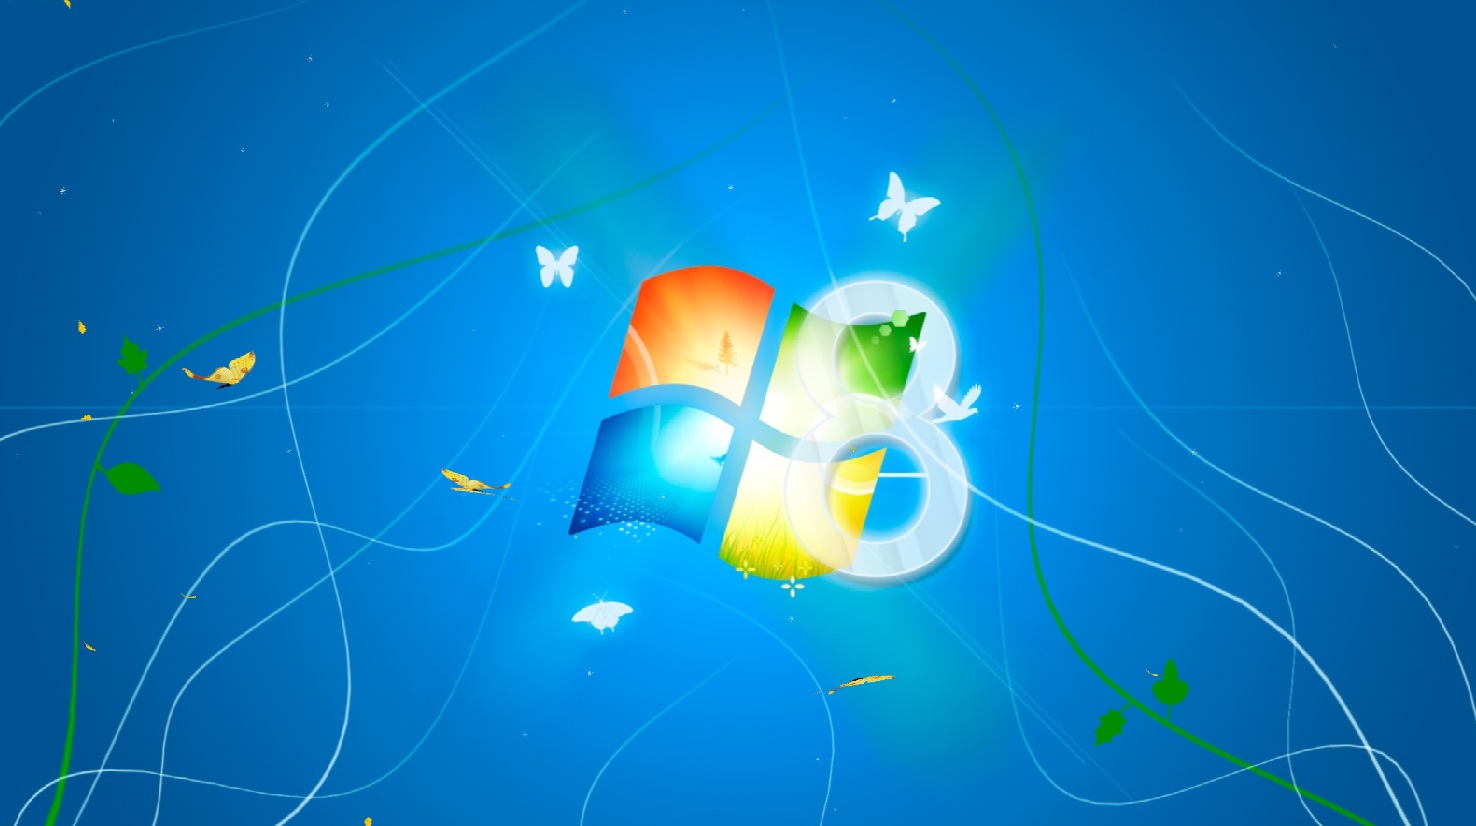 Windows 8 Light Animated Wallpaper full Windows 7 screenshot   Windows